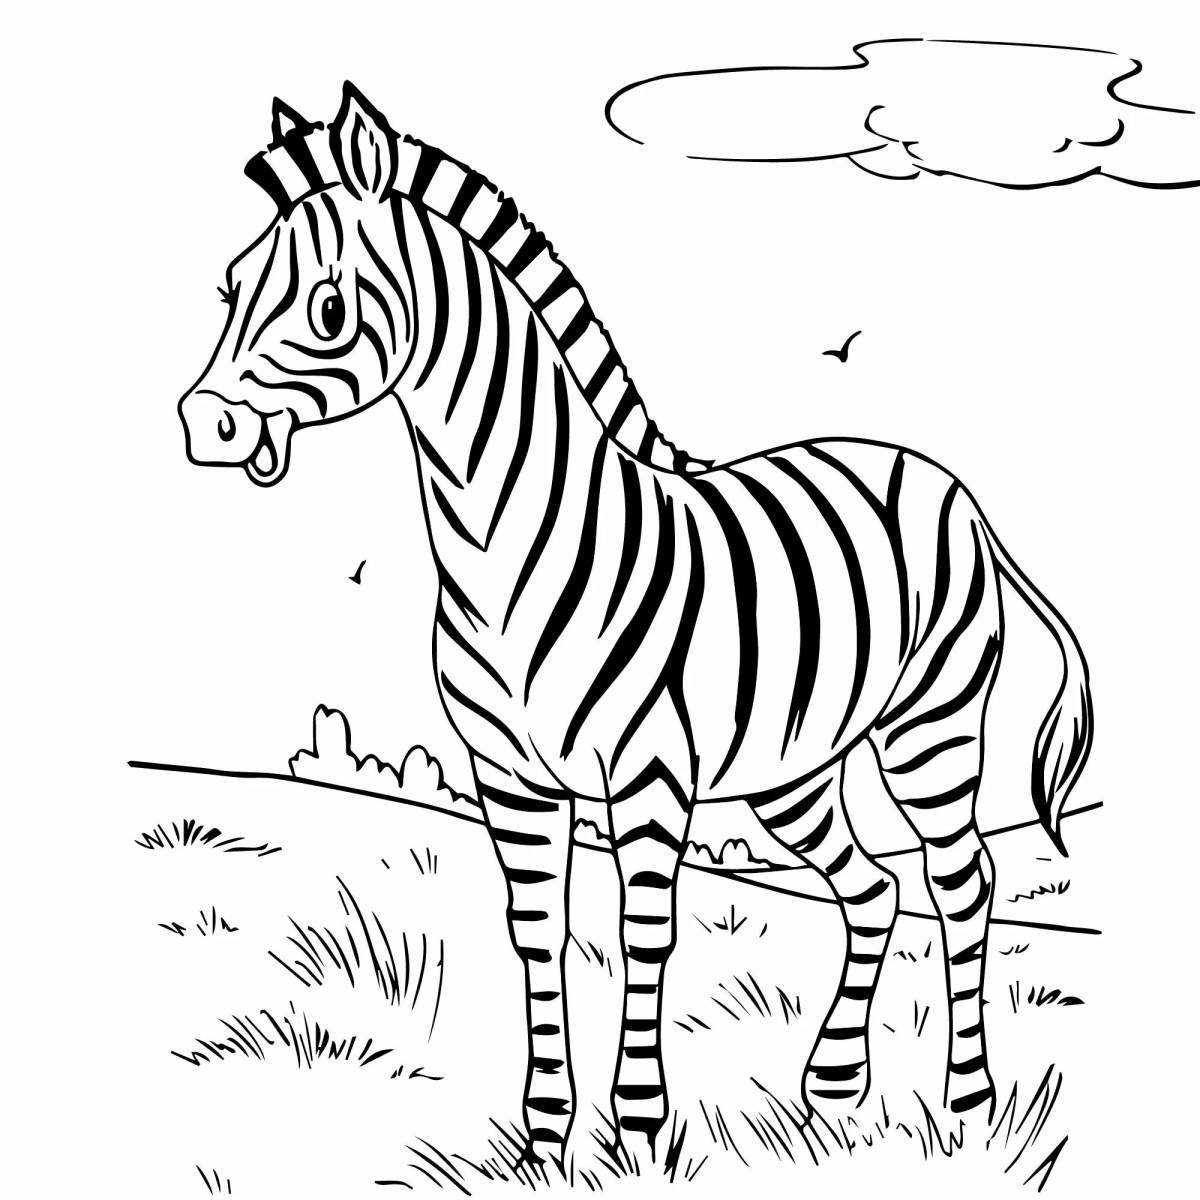 Zebra pattern #7